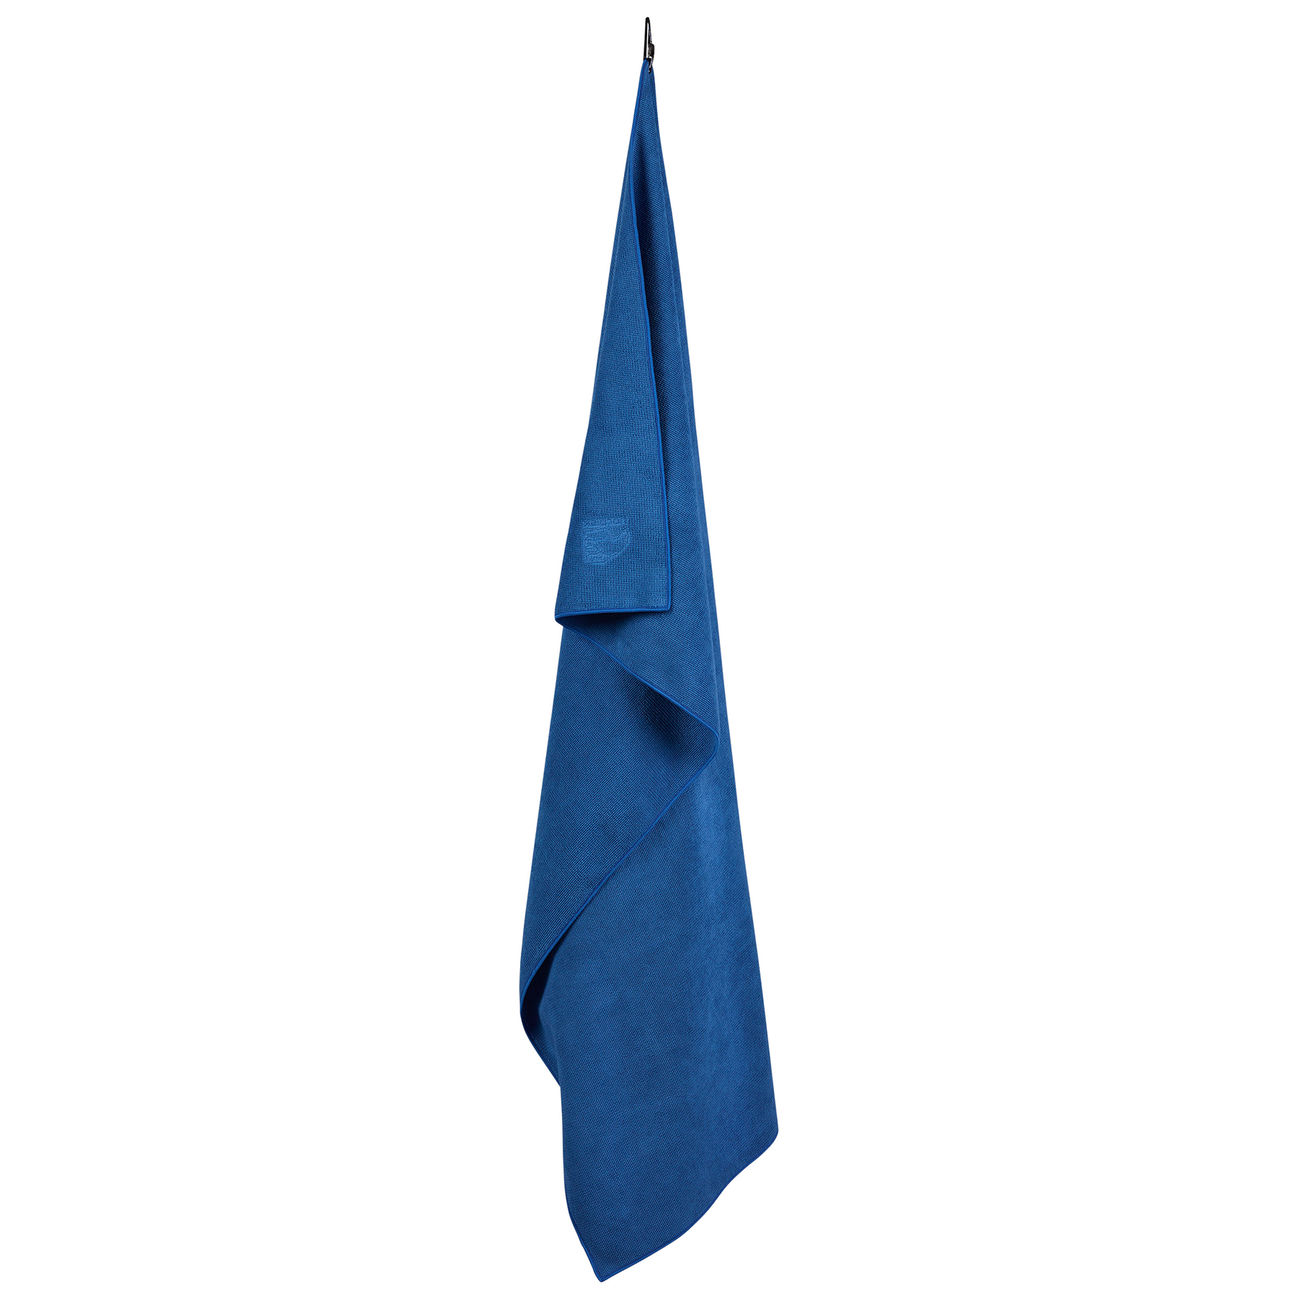 Nordisk Handtuch Terry Towel L blau 60 x 120 cm Bild 1